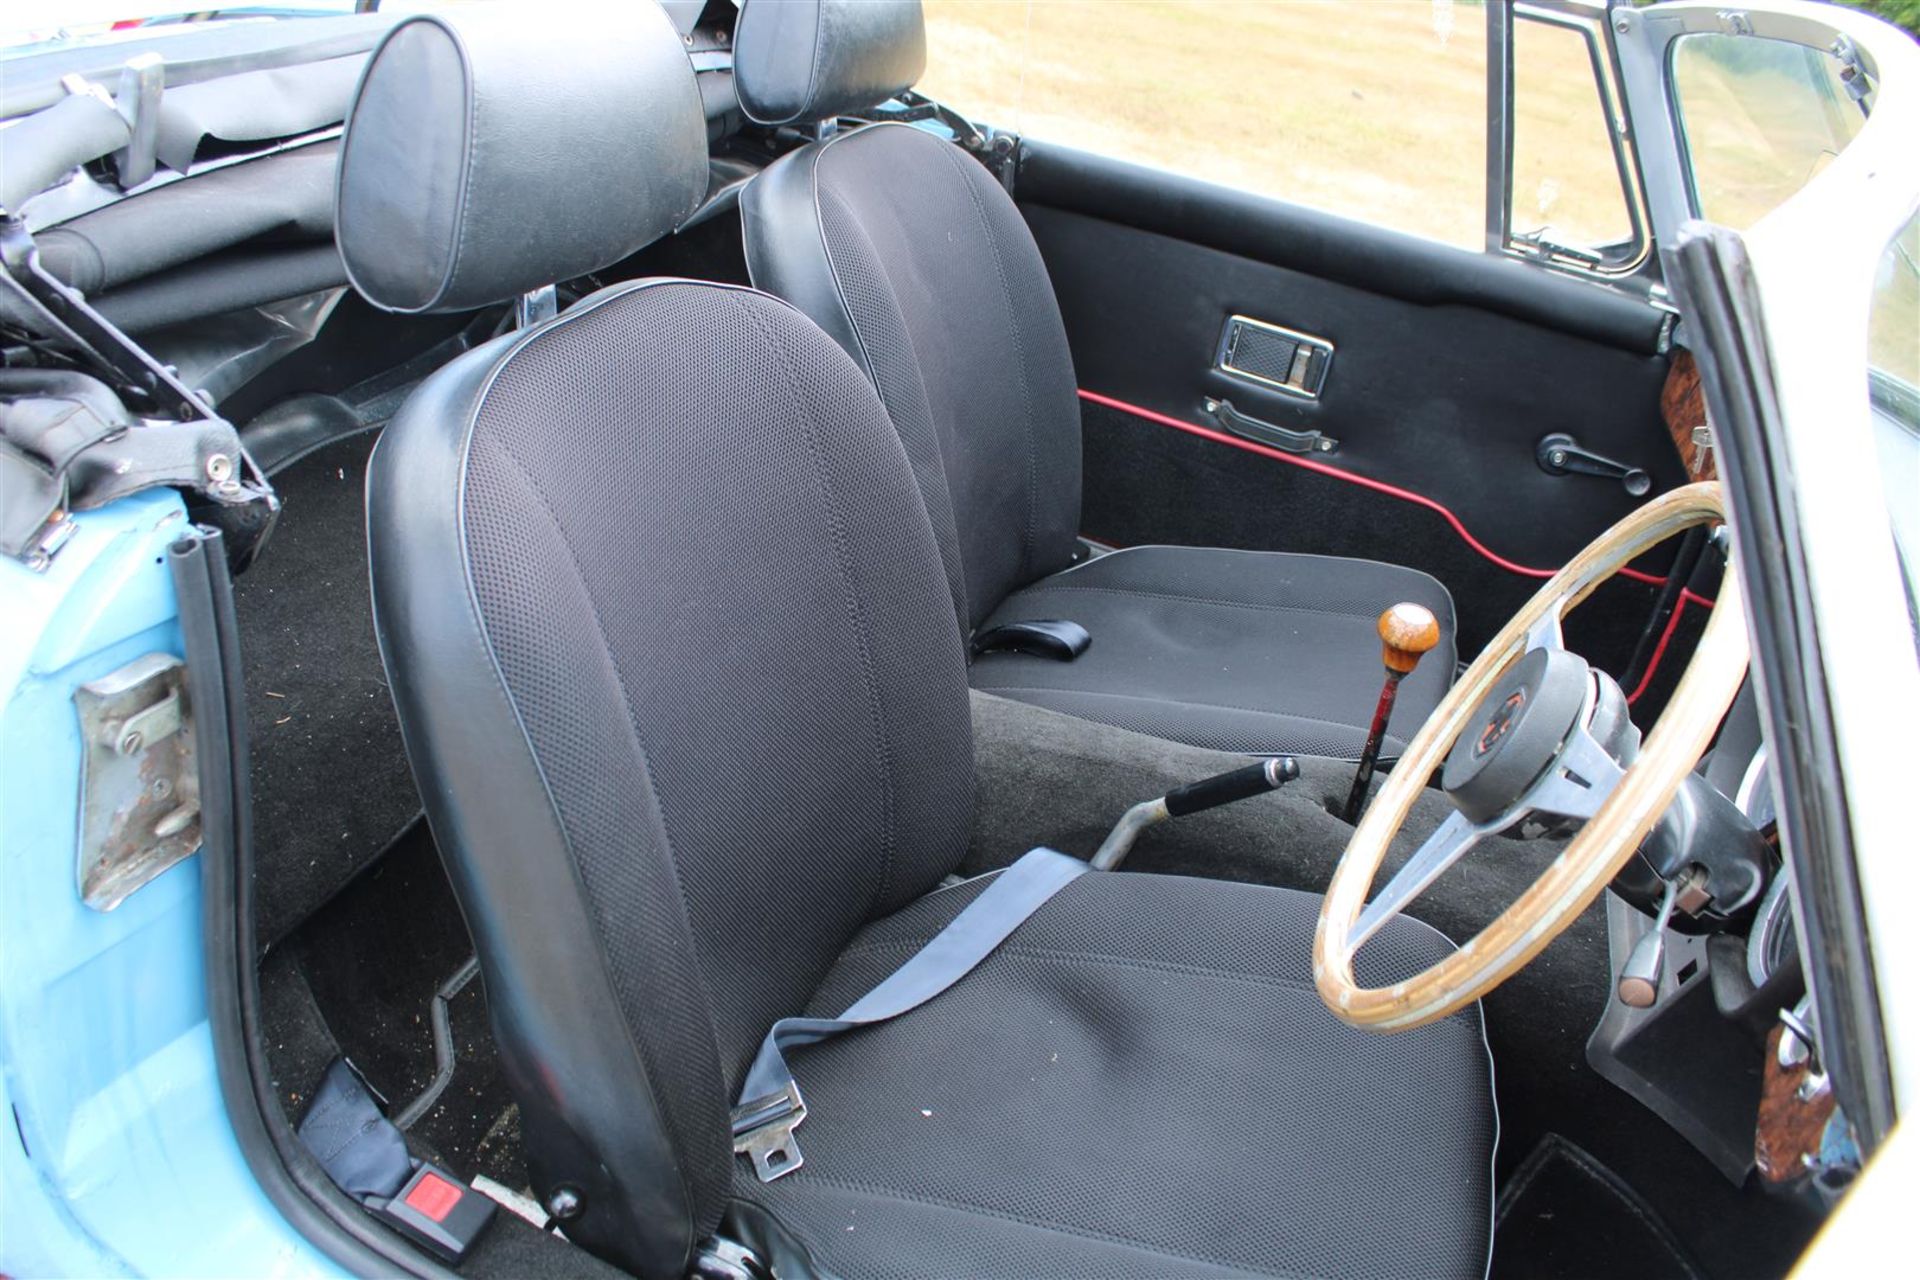 1972 MG B Roadster - Image 13 of 26